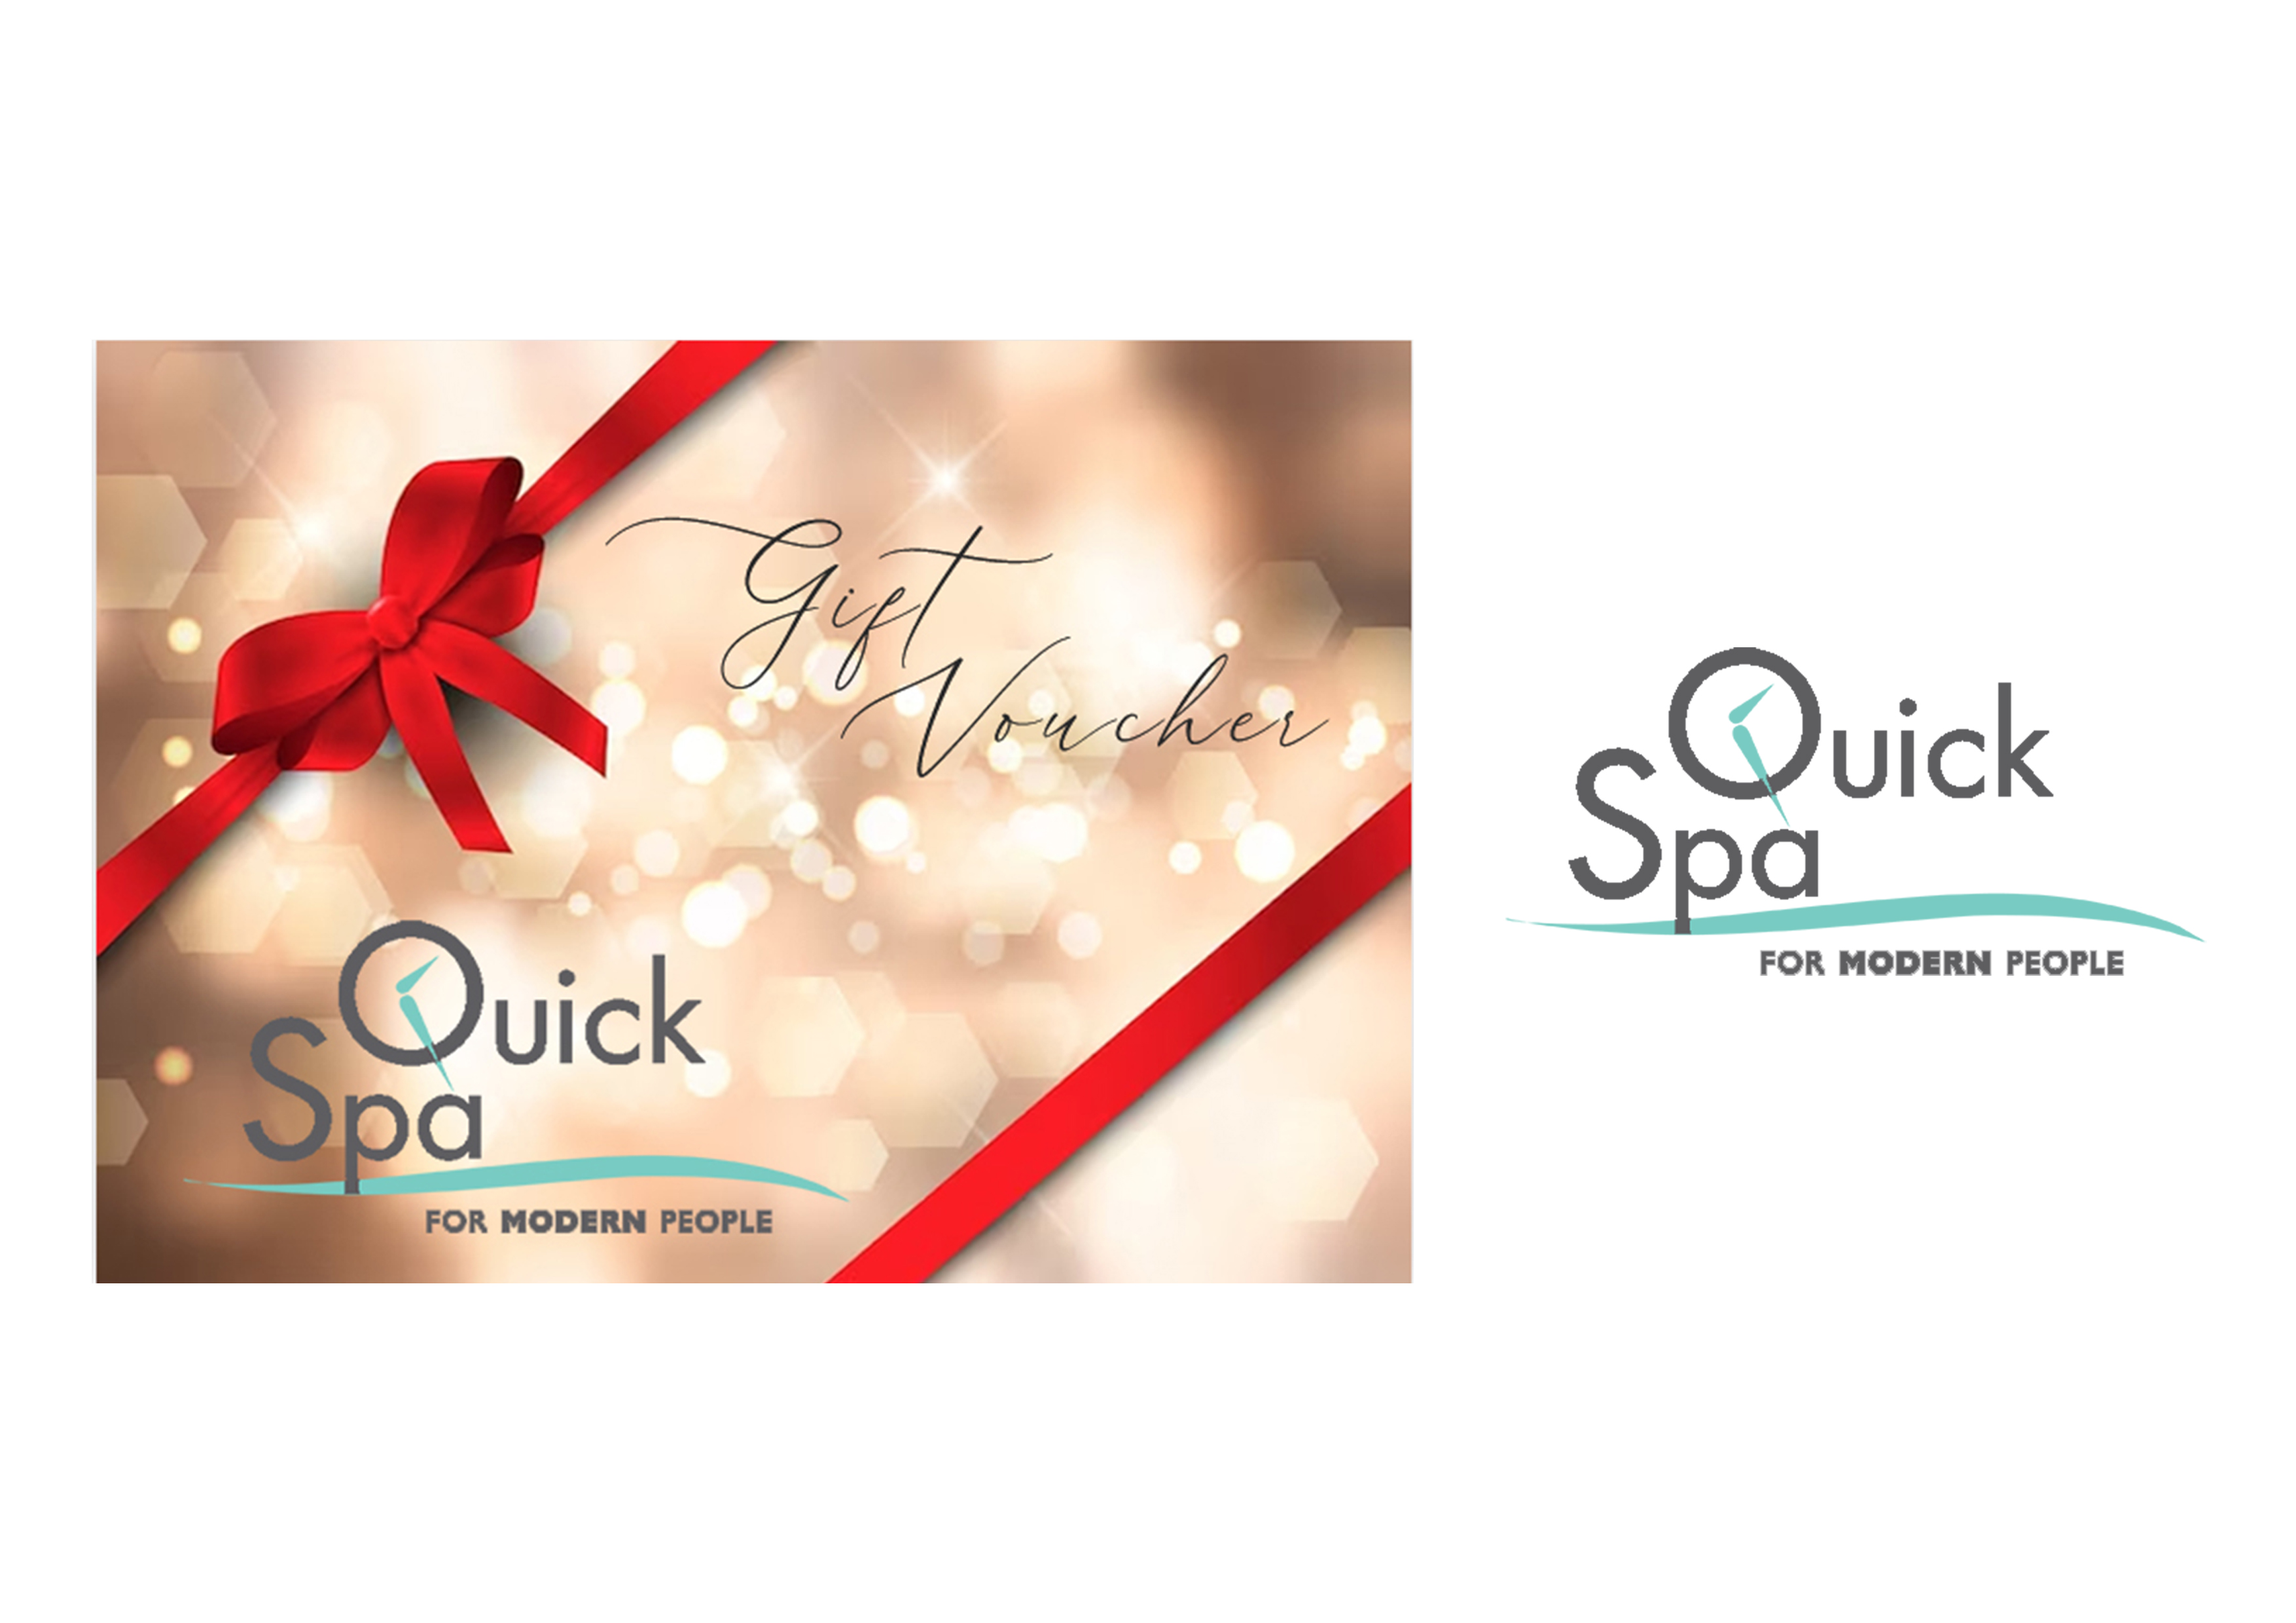 To HELLO! χαρίζει σε δύο τυχερούς vouchers για χαλαρωτικές υπηρεσίες περιποίησης στο QuickSpa